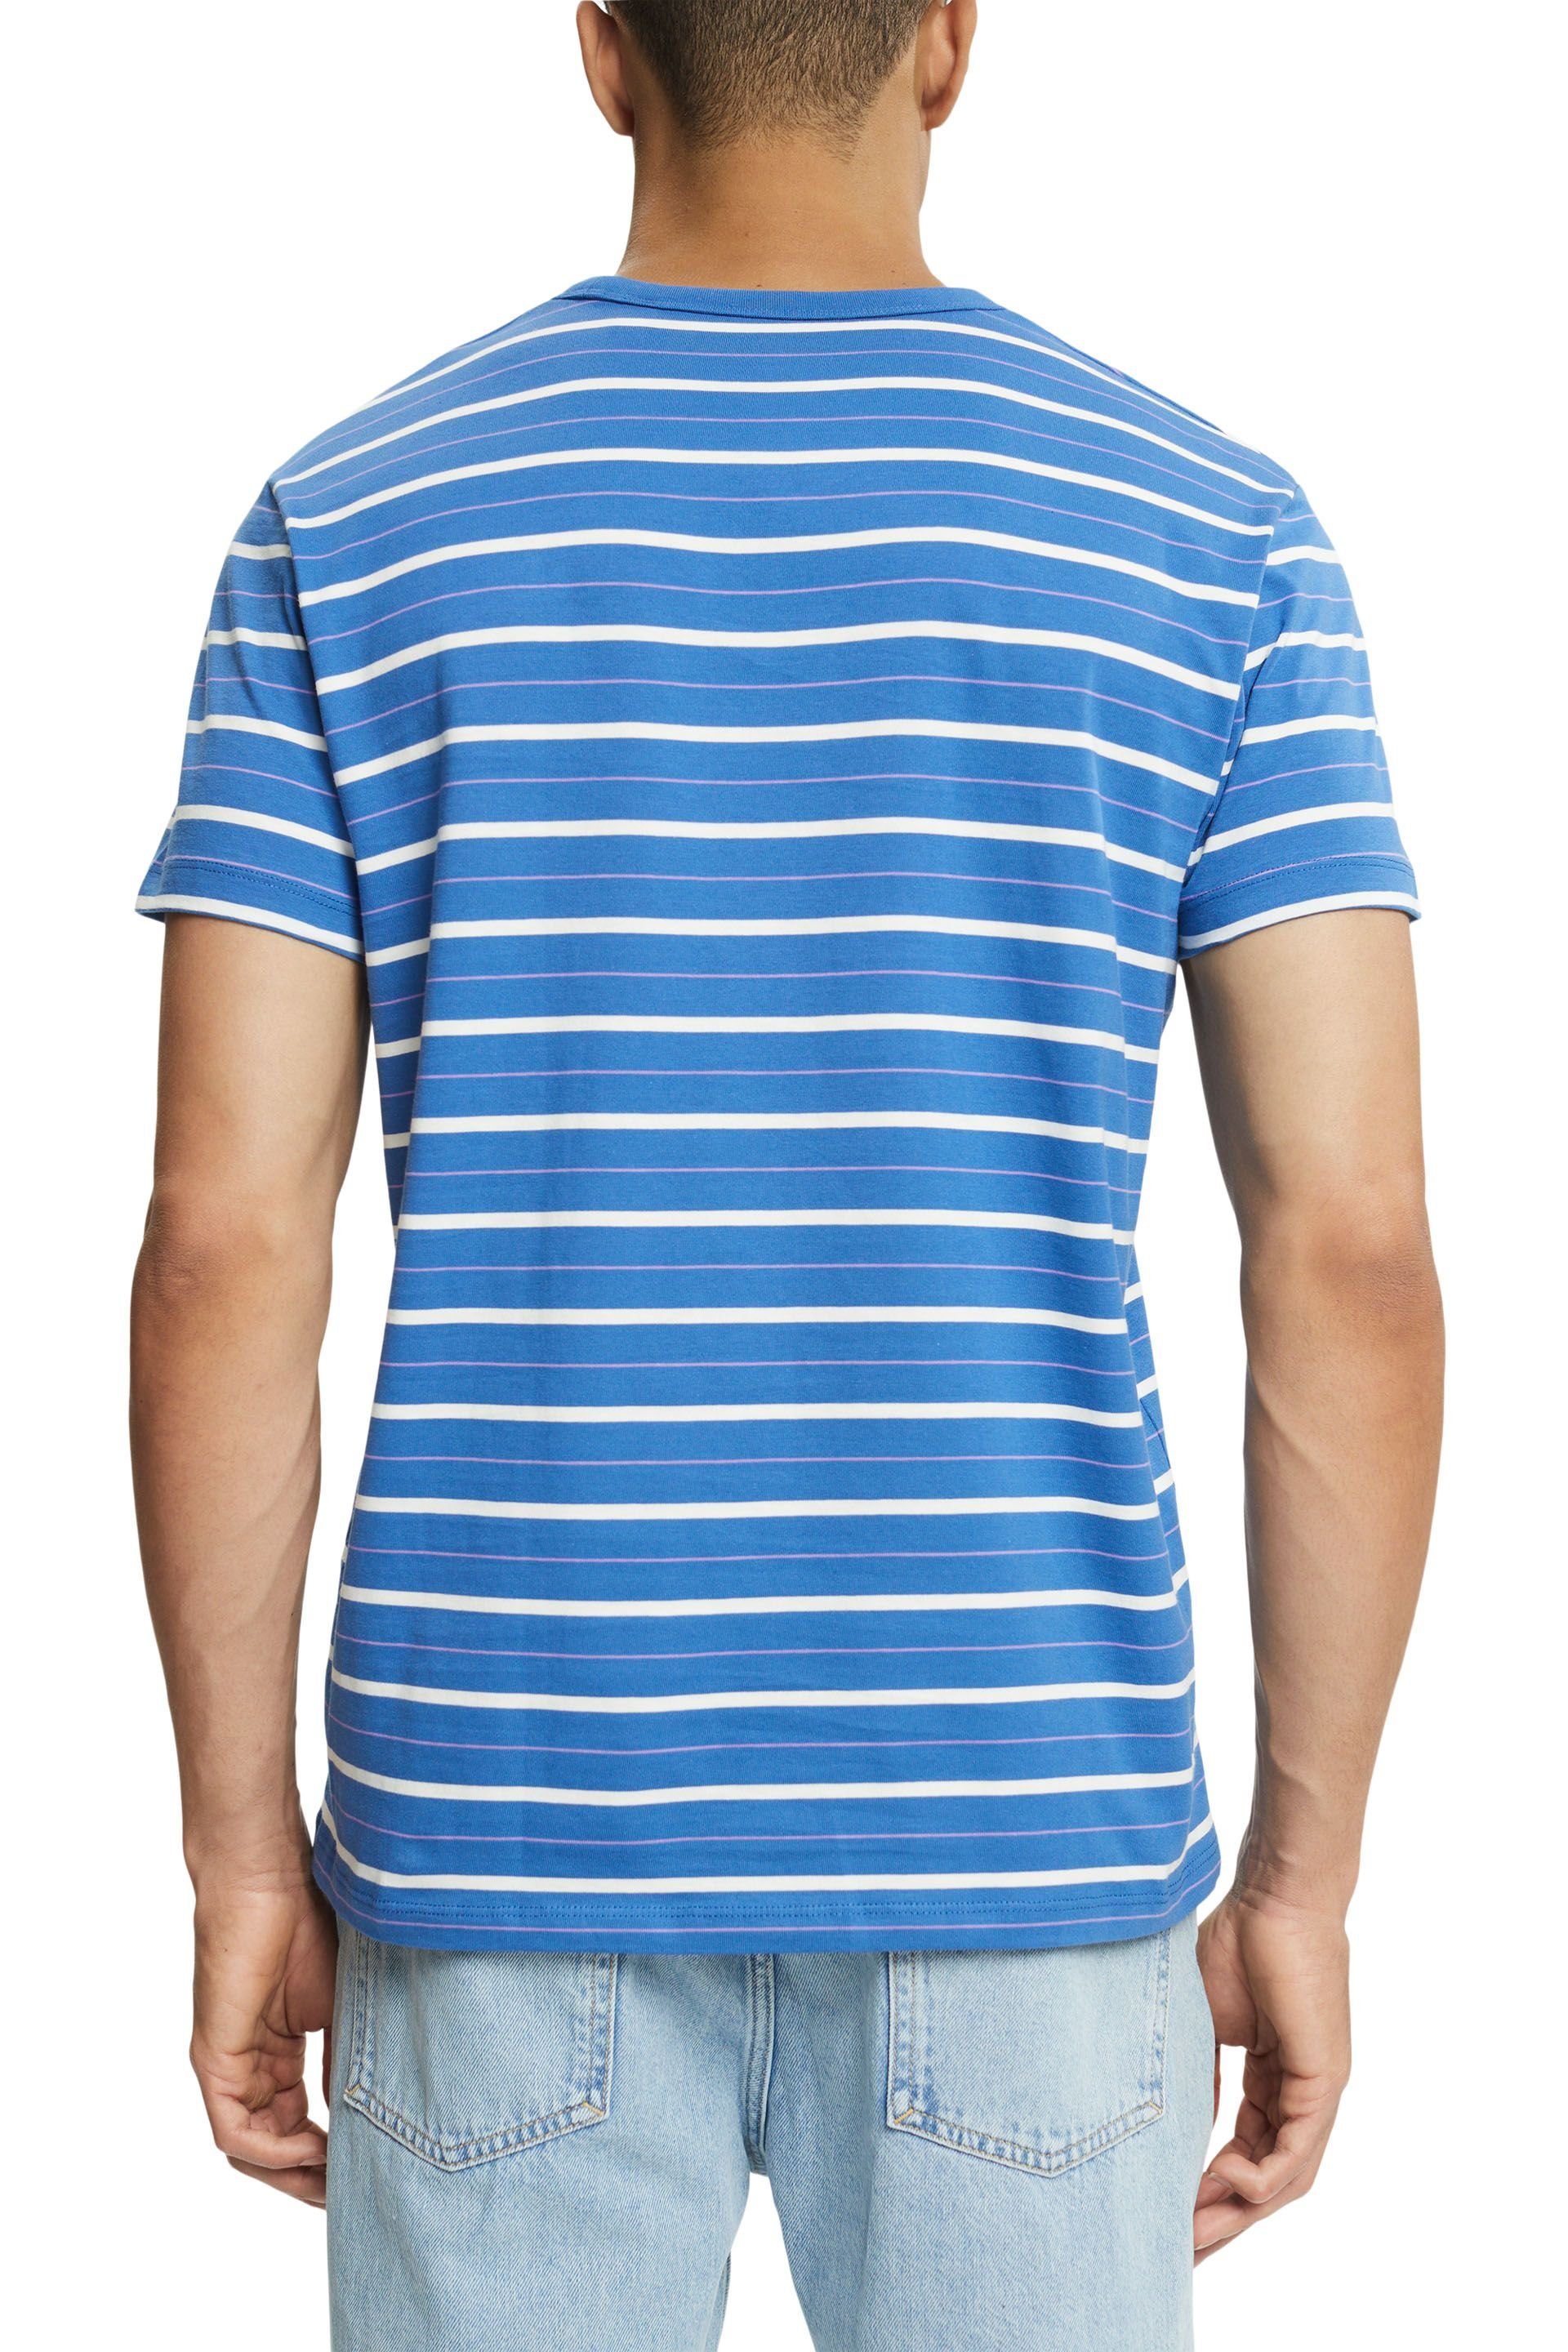 Esprit T-Shirt blue